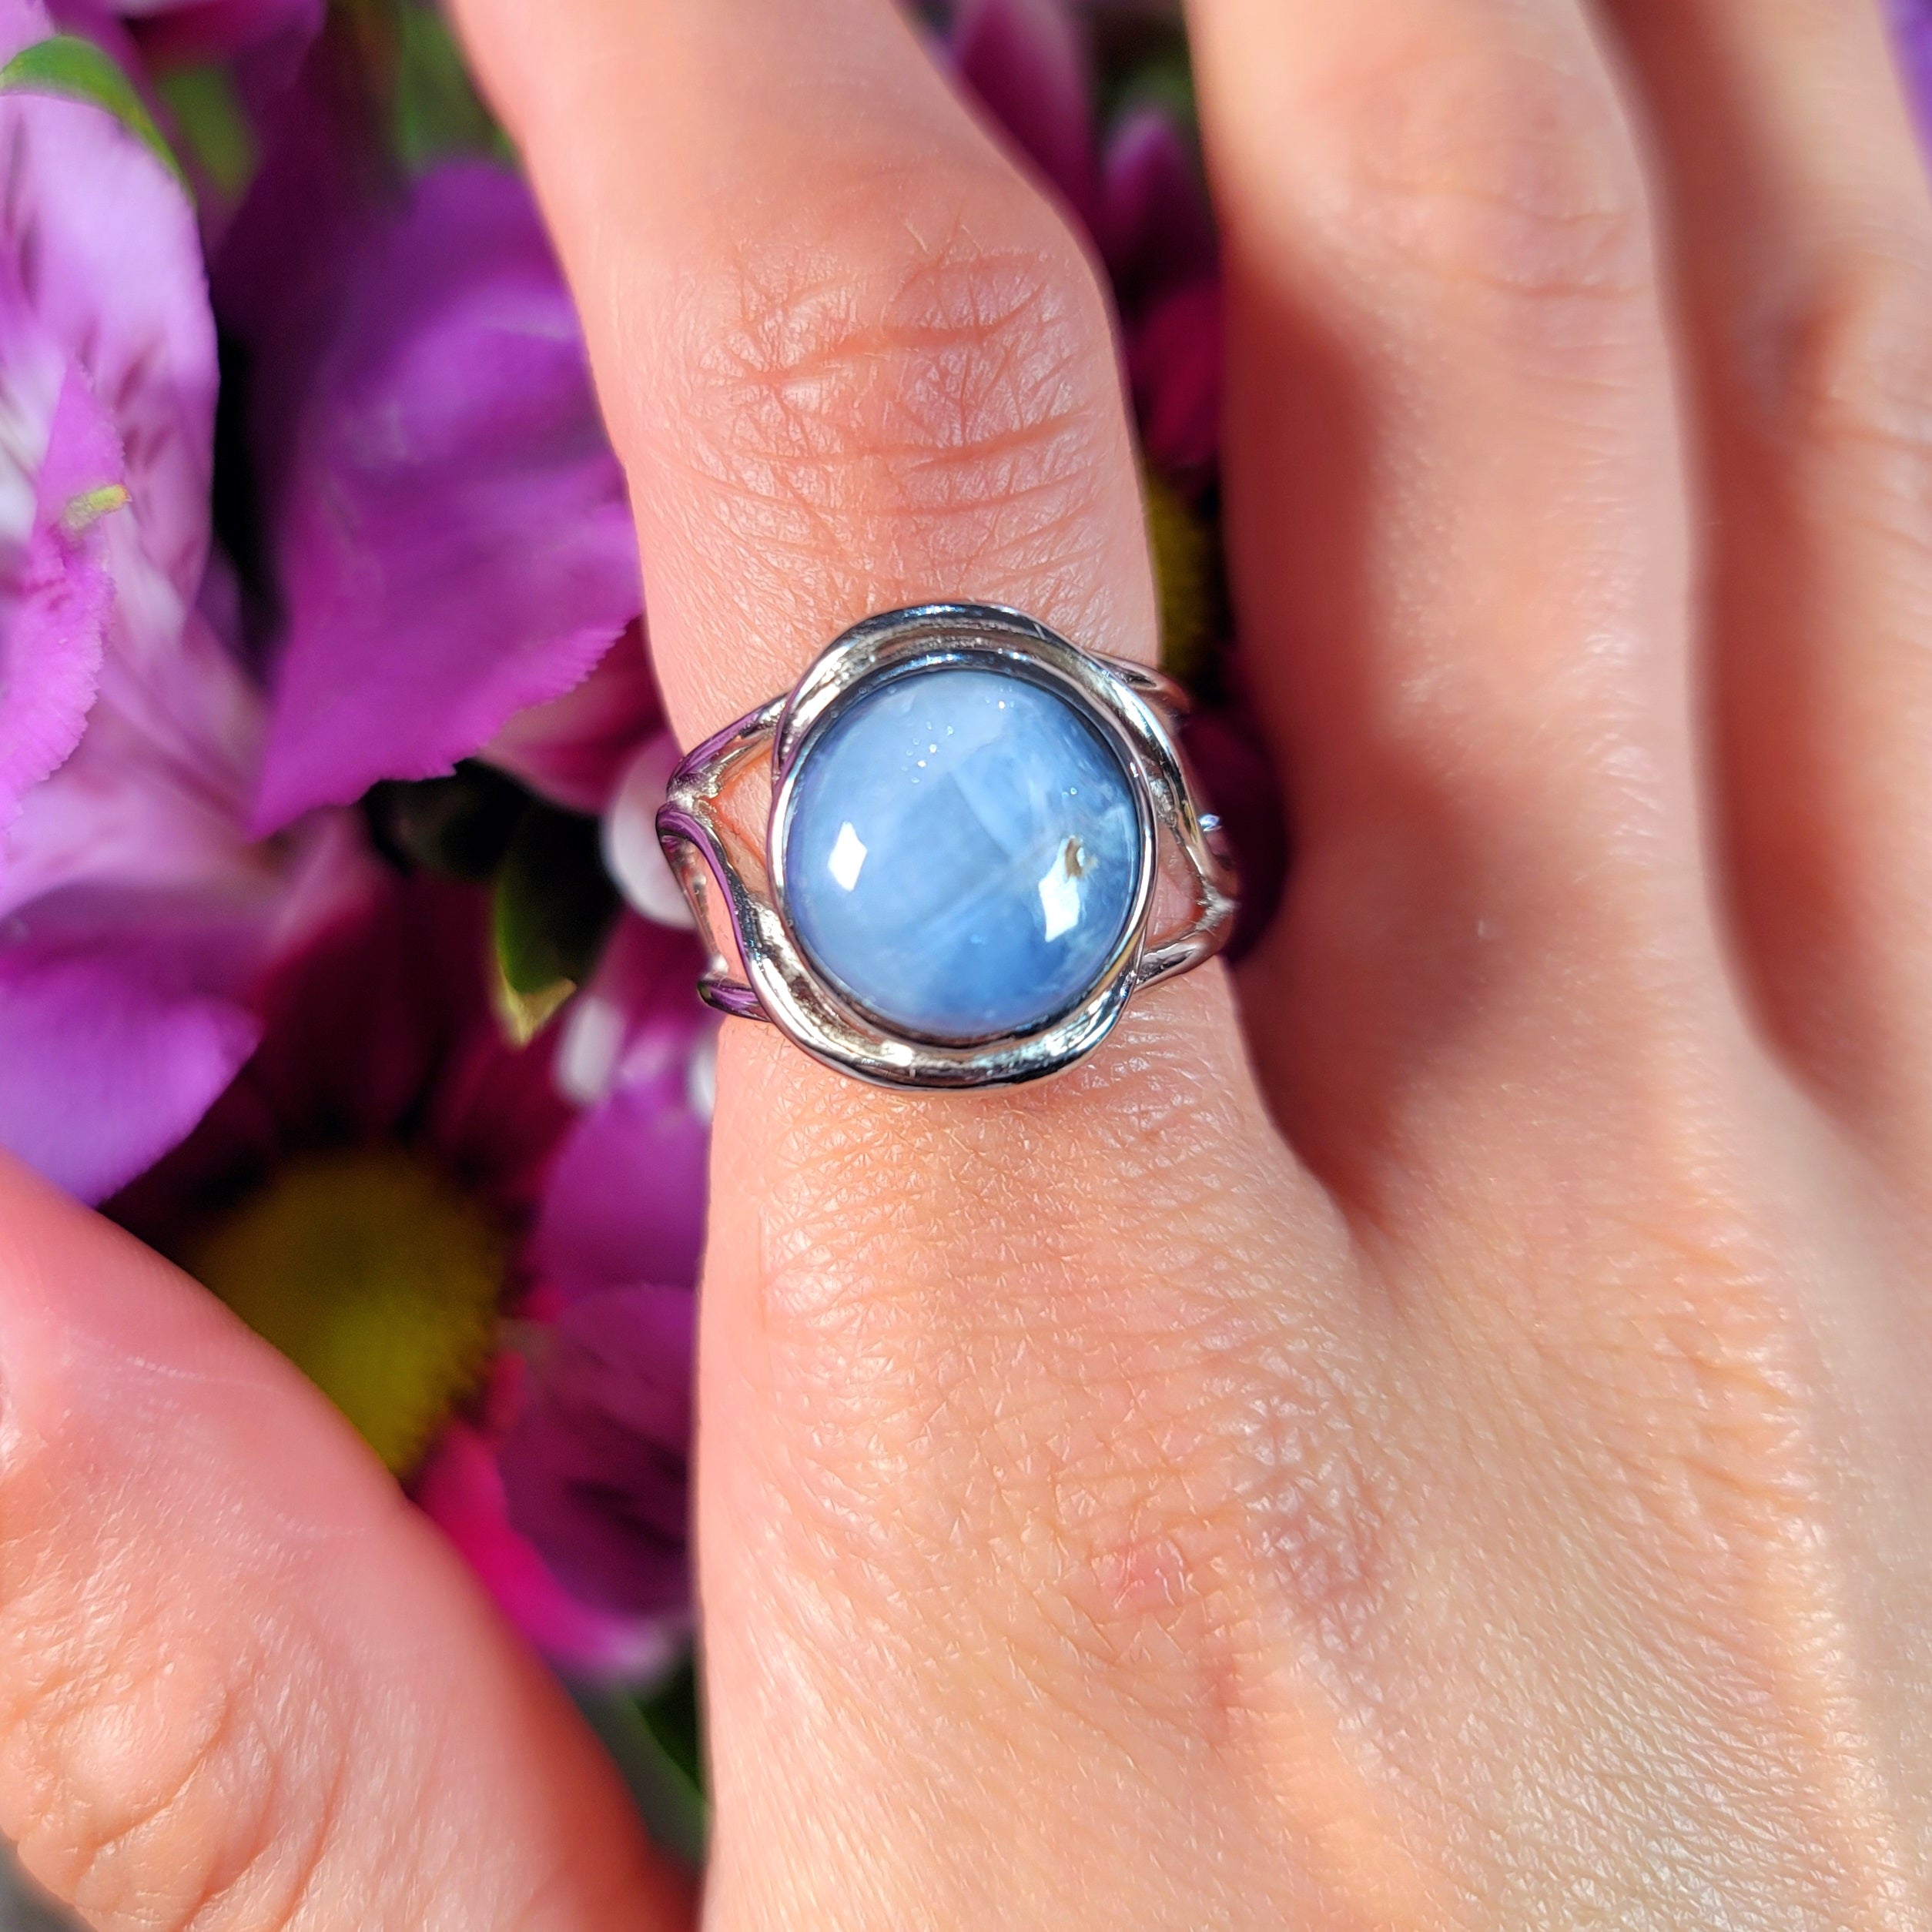 Star Blue Sapphire Adjustable Finger Bracelet .925 Silver for Focus, Discipline and Wisdom